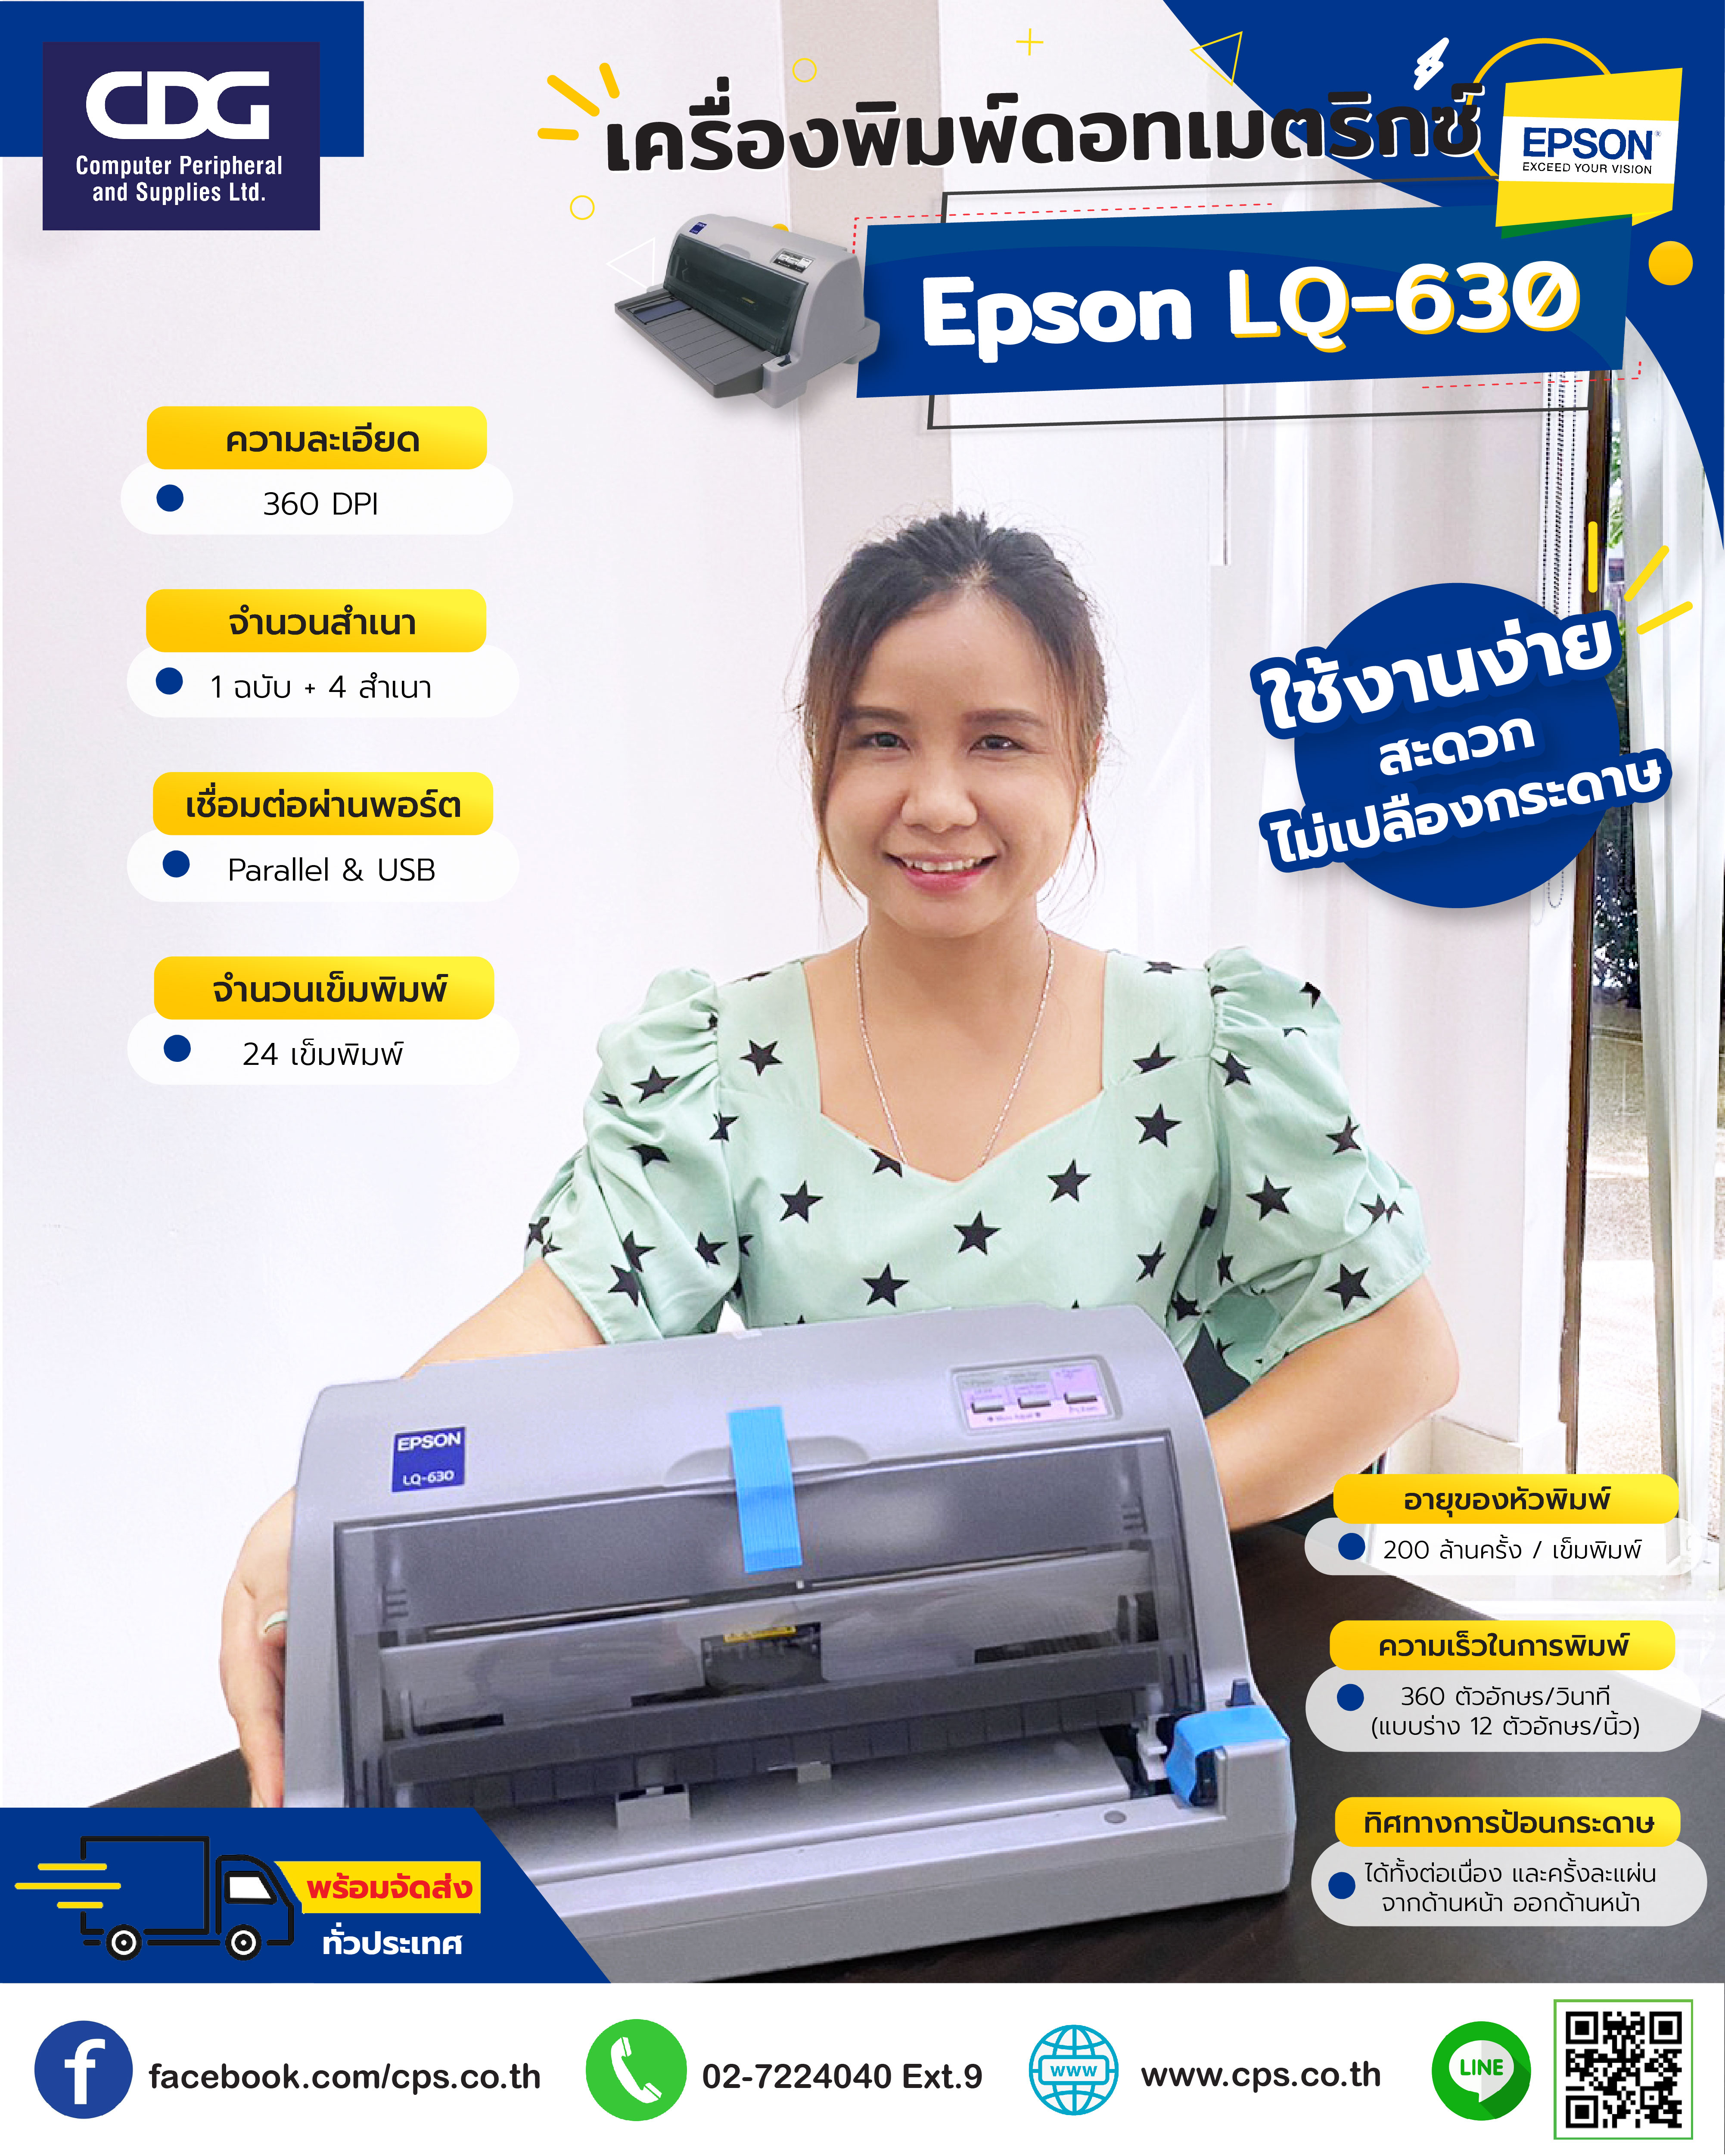 Epson LQ-630 Dot Printer - cps